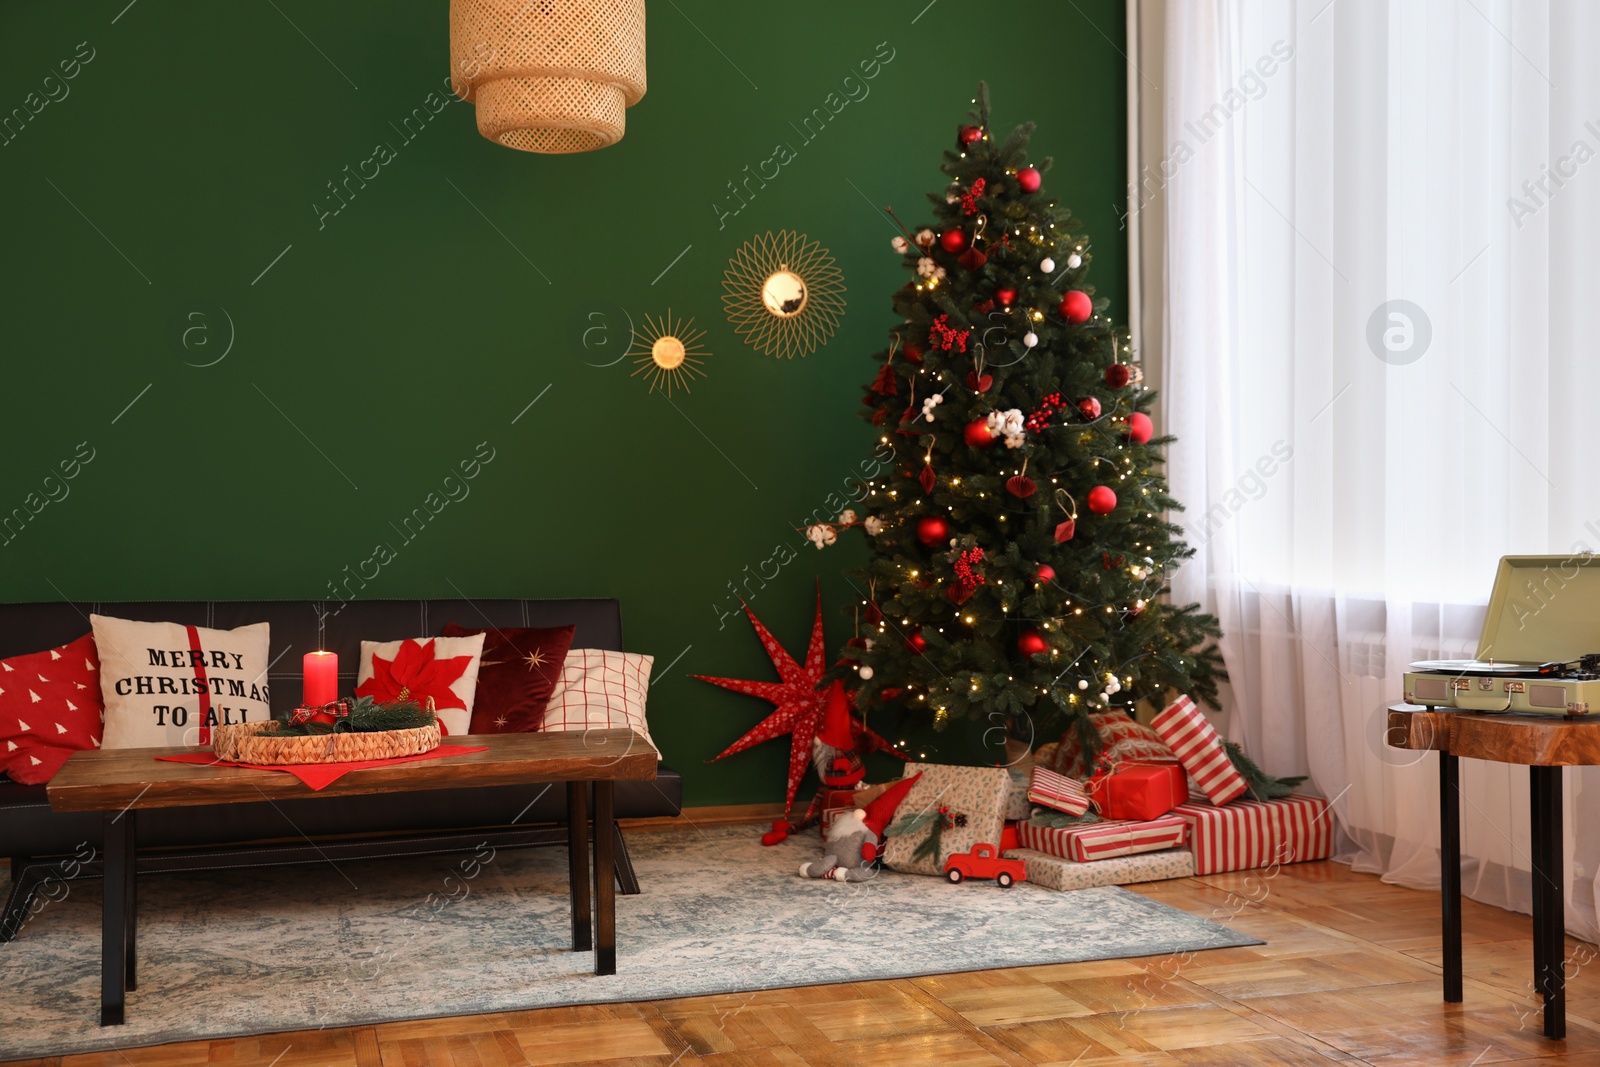 Photo of Cozy living room with Christmas tree and festive decor. Interior design